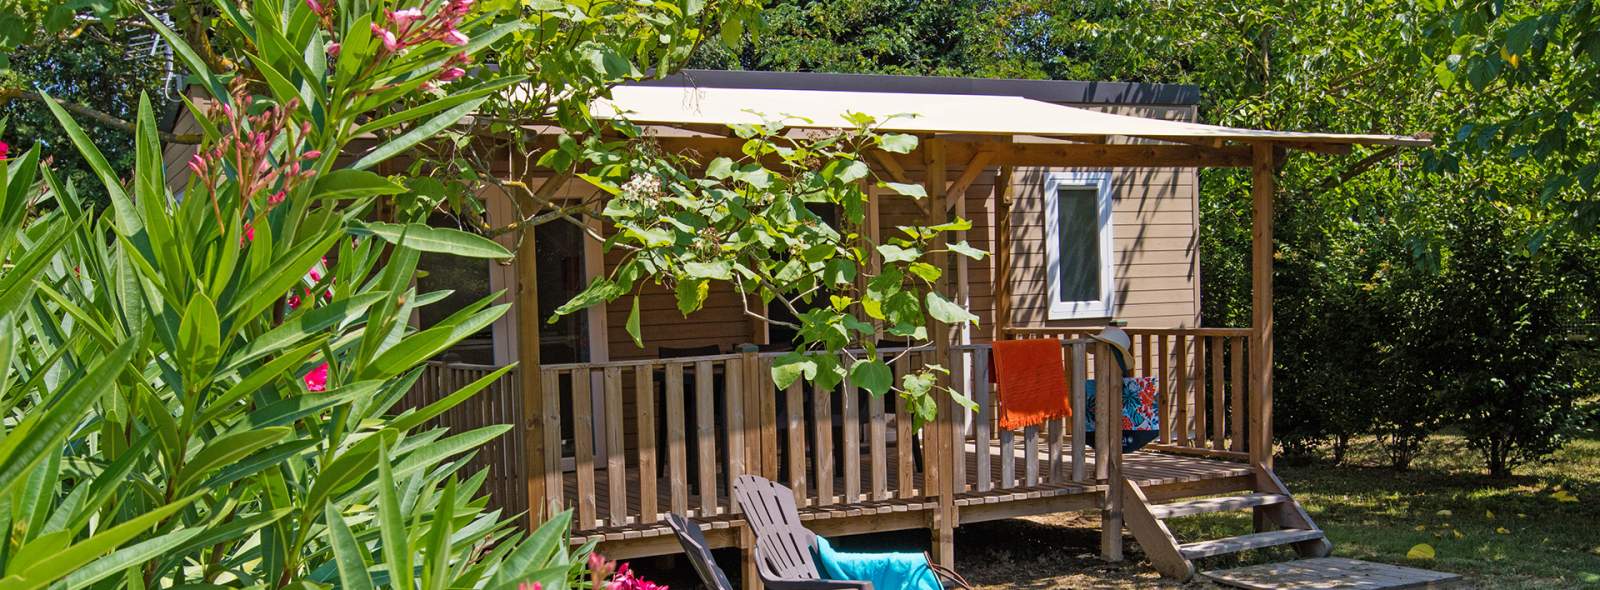 exterieur location lodge safari camping soleil fruite